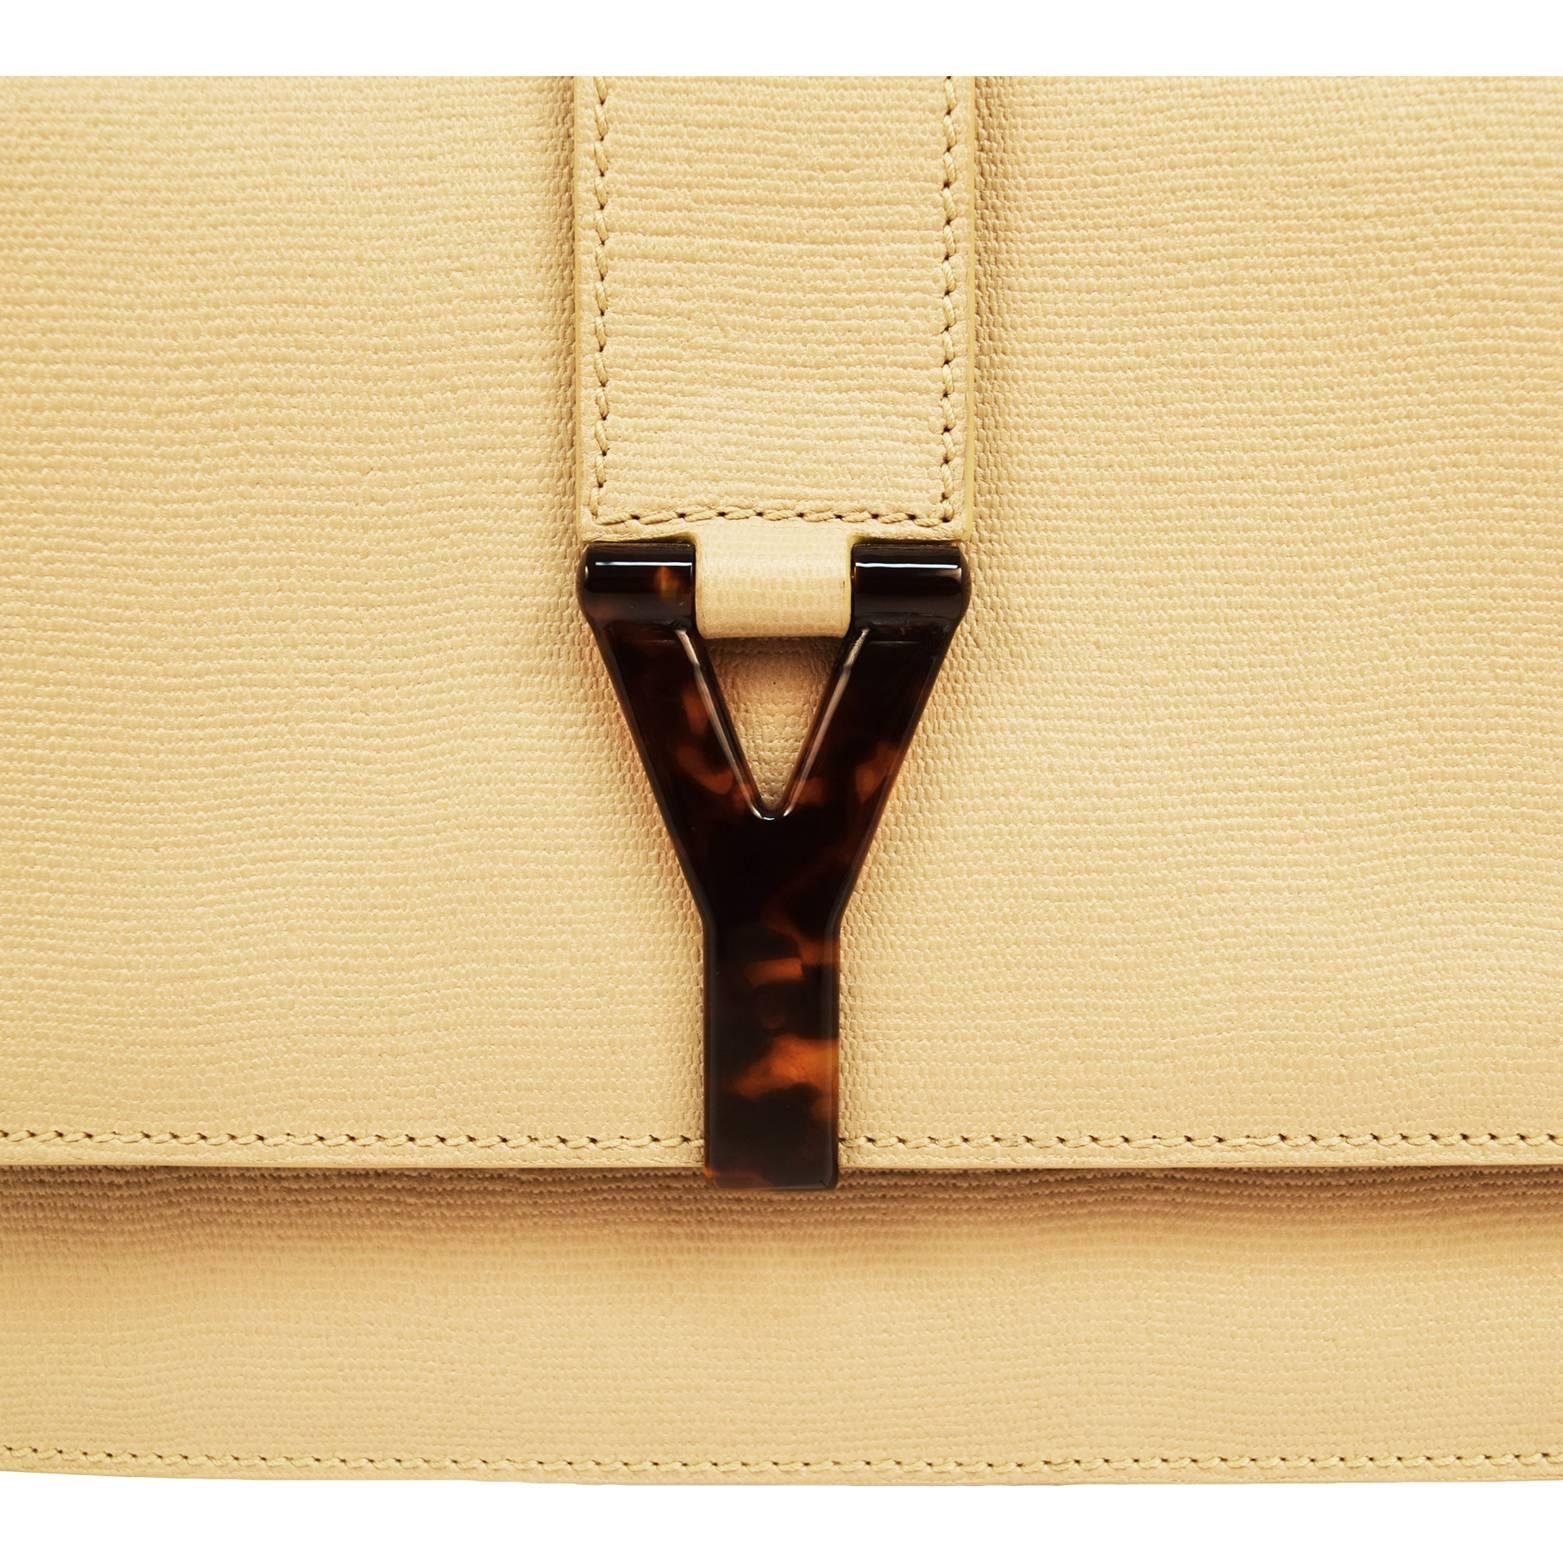 Yves Saint Laurent Light Camel Leather Shoulder Bag Tortoiseshell Y Buckle In Excellent Condition For Sale In Henrico, VA